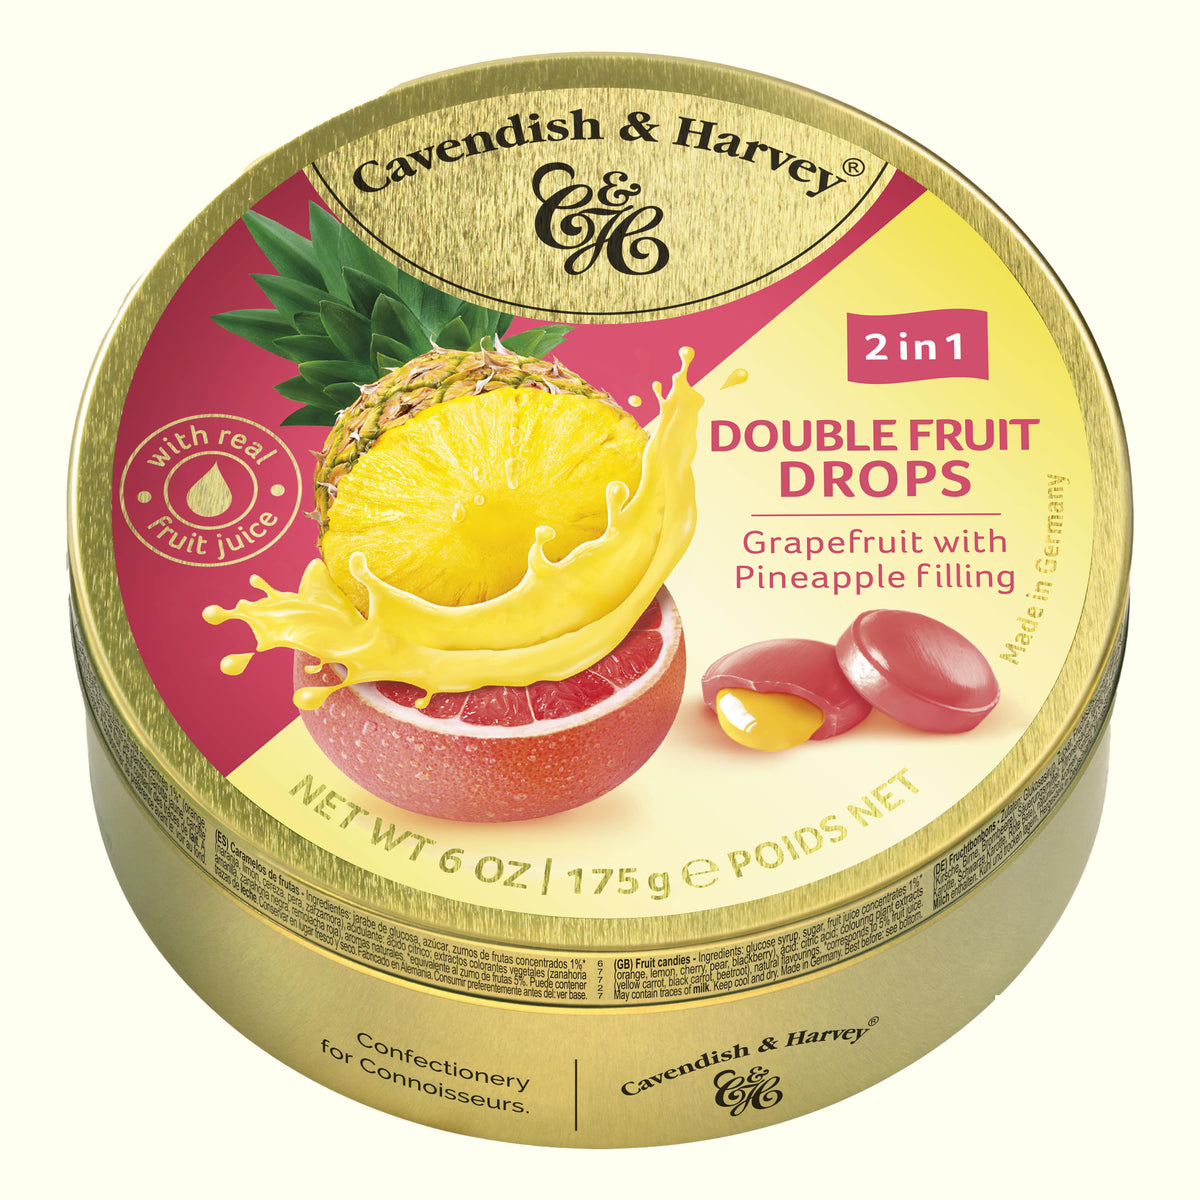 Cavendish & Harvey Grapefruit with Pineapple Gefüllte Drops 175g